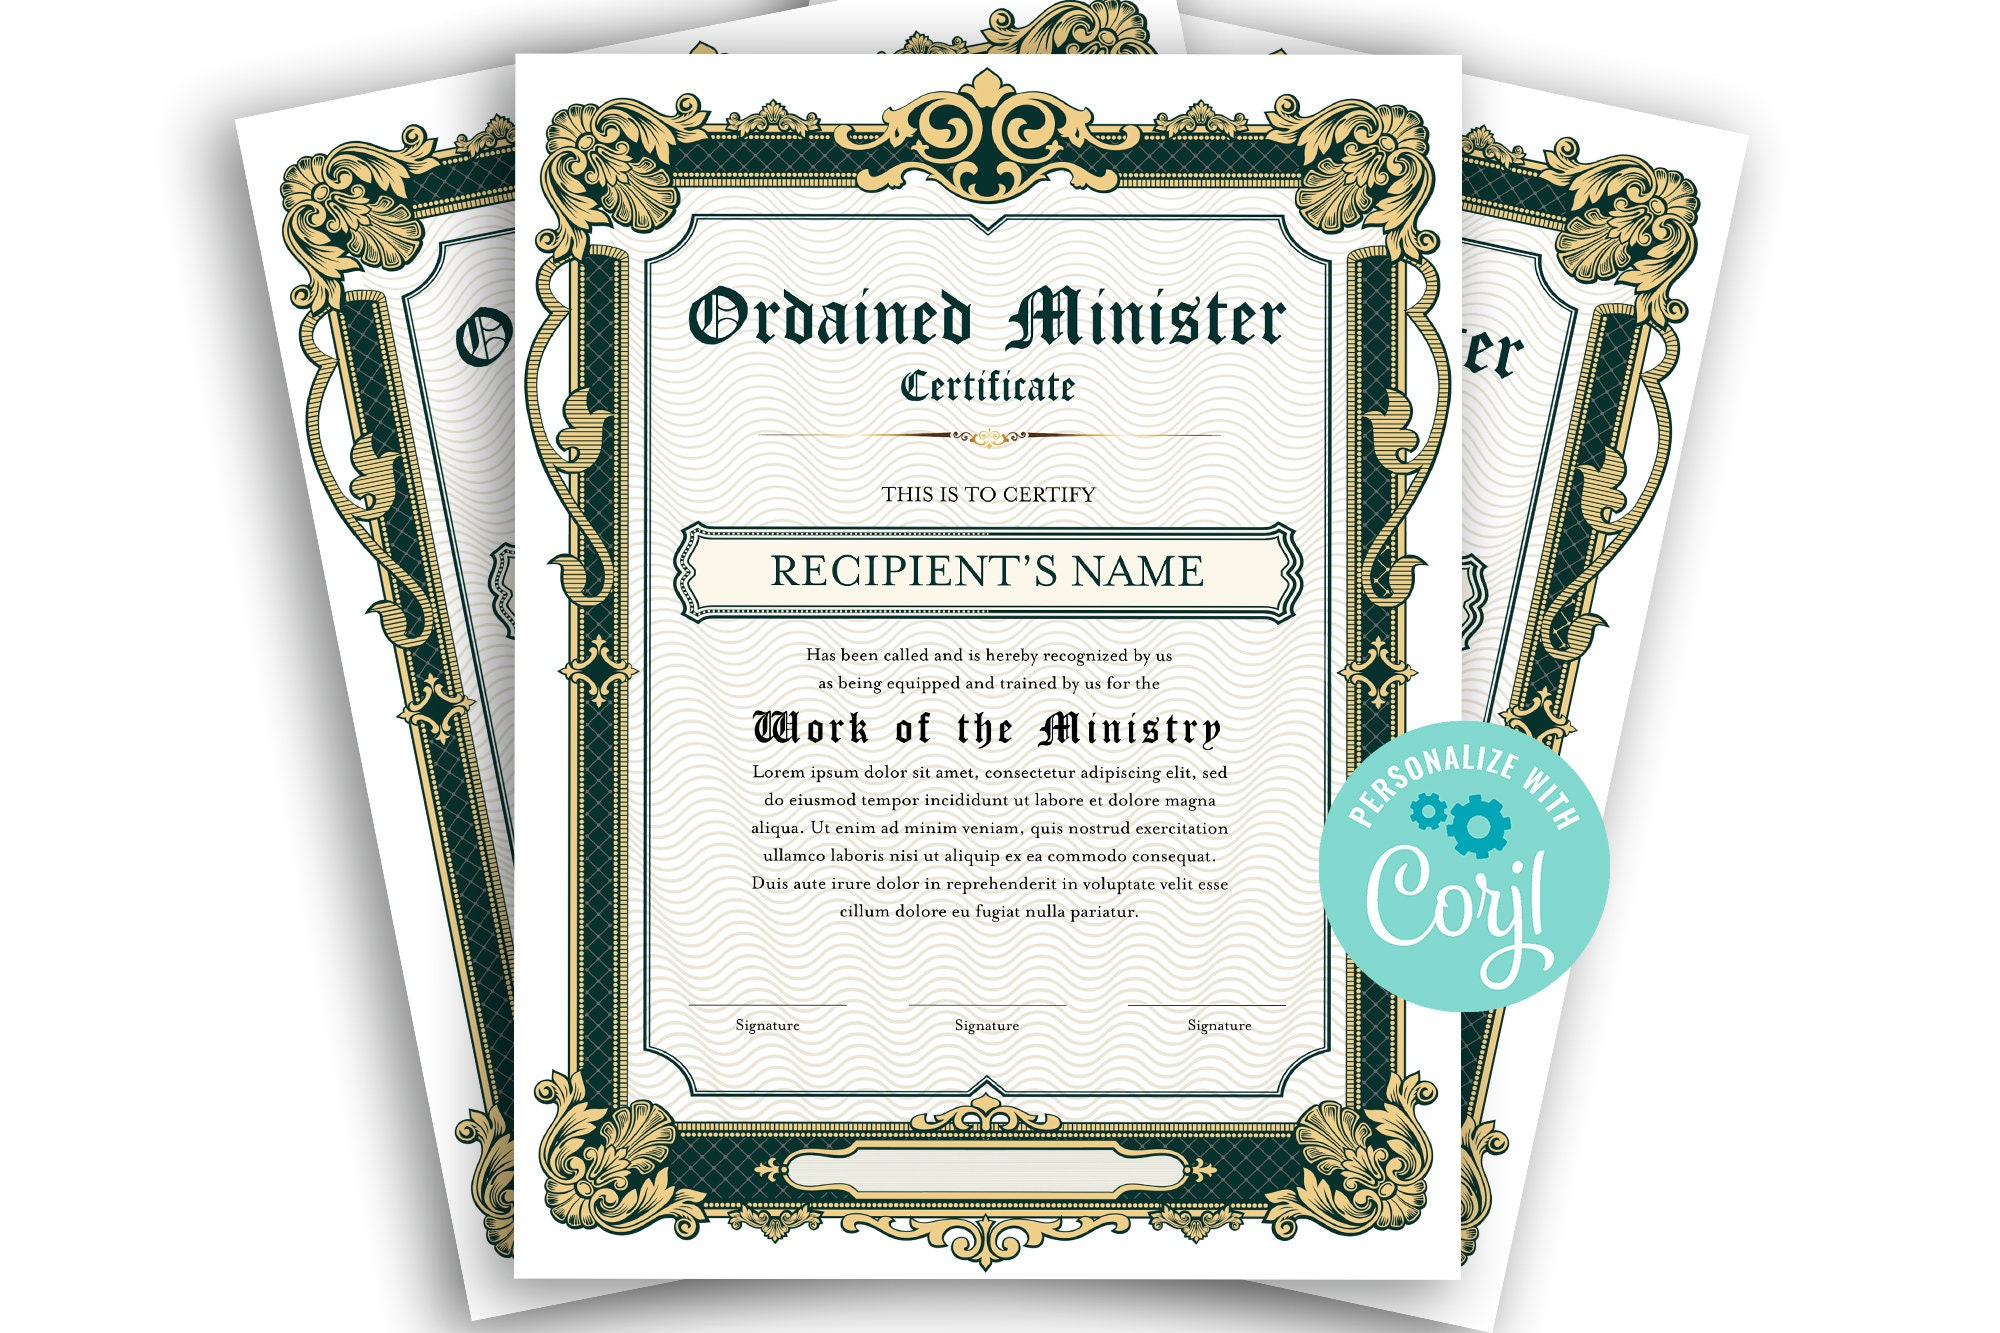 Certificate of Ordination Minister Editable Template Portrait - Etsy Regarding Ordination Certificate Templates